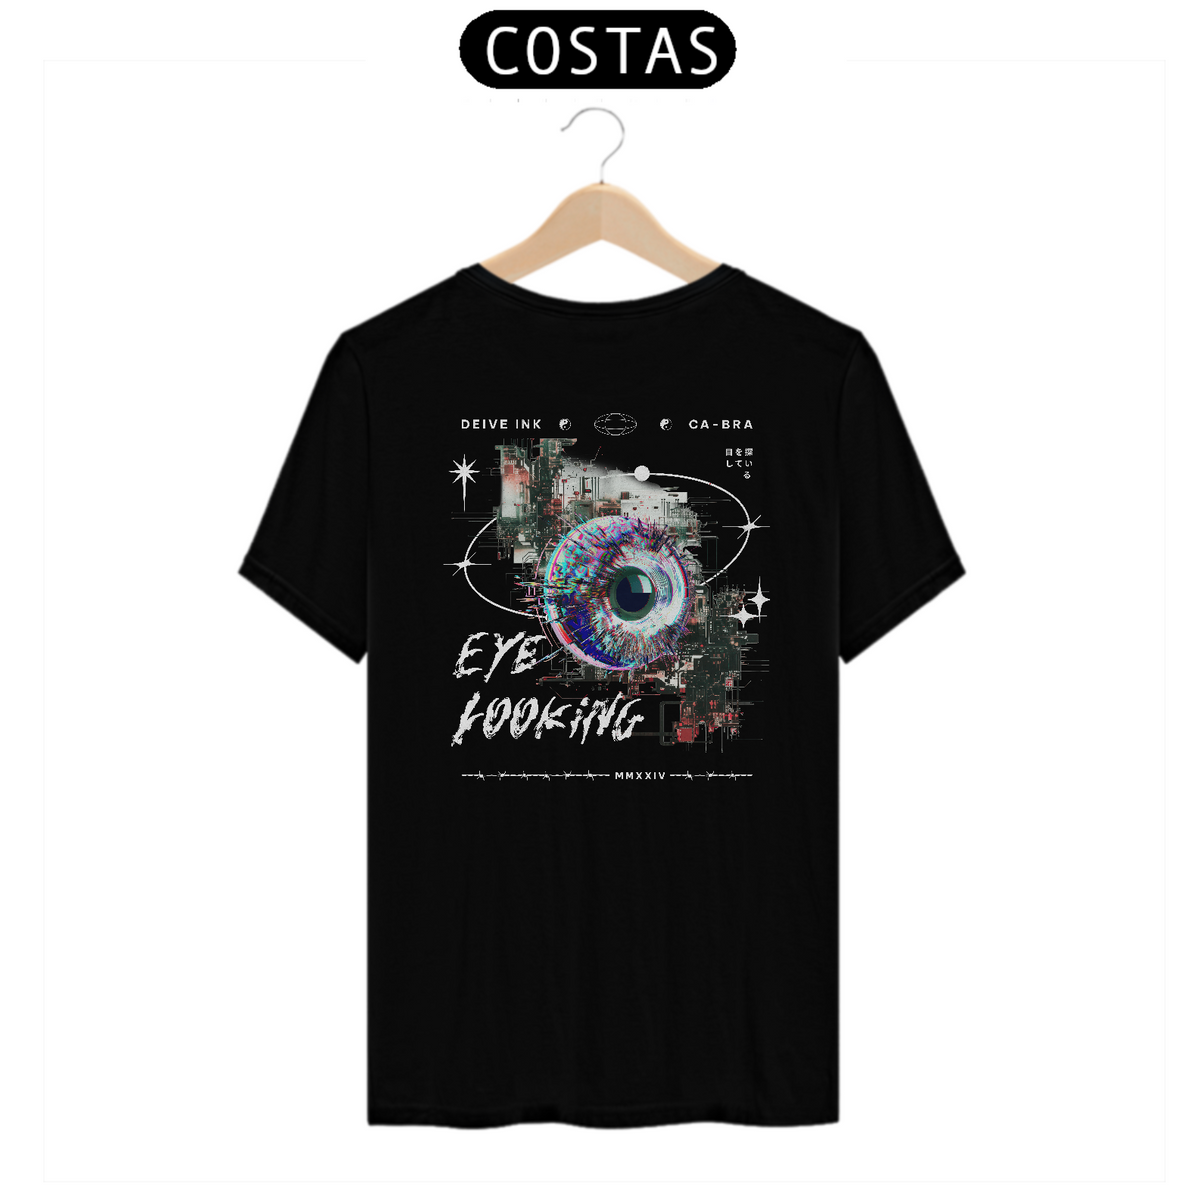 Nome do produto: Camiseta Eye Looking Streetwear